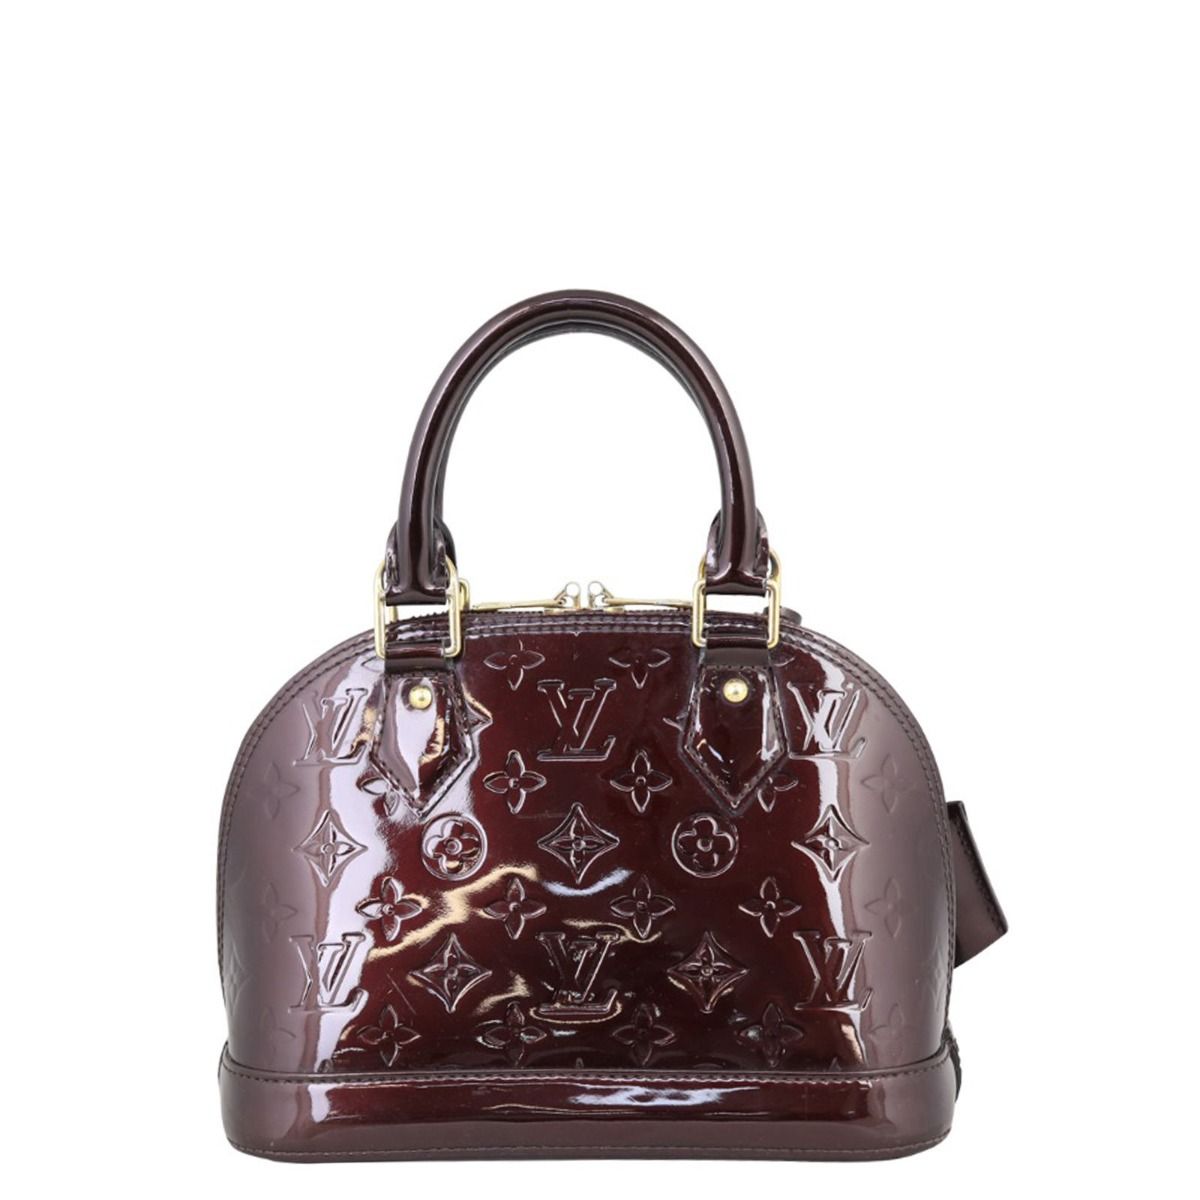 Roseberys London  A Louis Vuitton Alma Monogram Vernis handbag, the bag